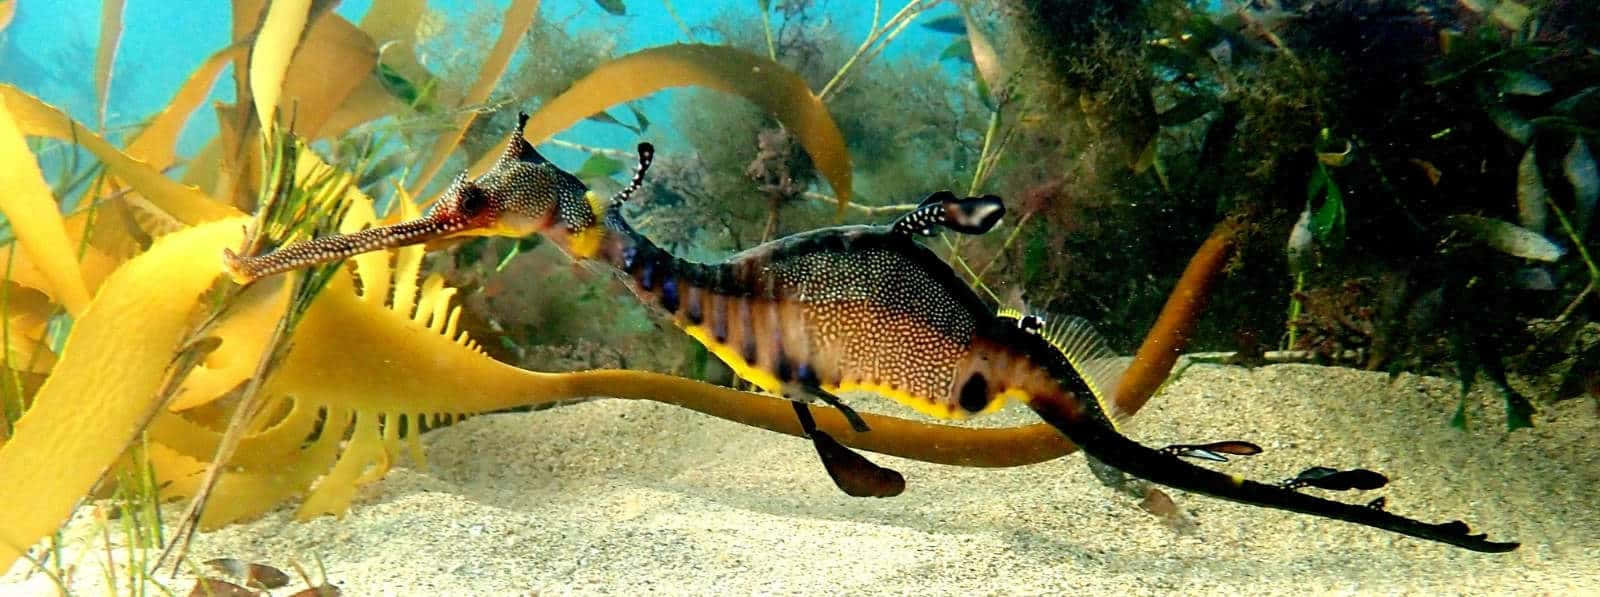 Weedy Sea Dragon Swimming Amongst Kelp Wallpaper